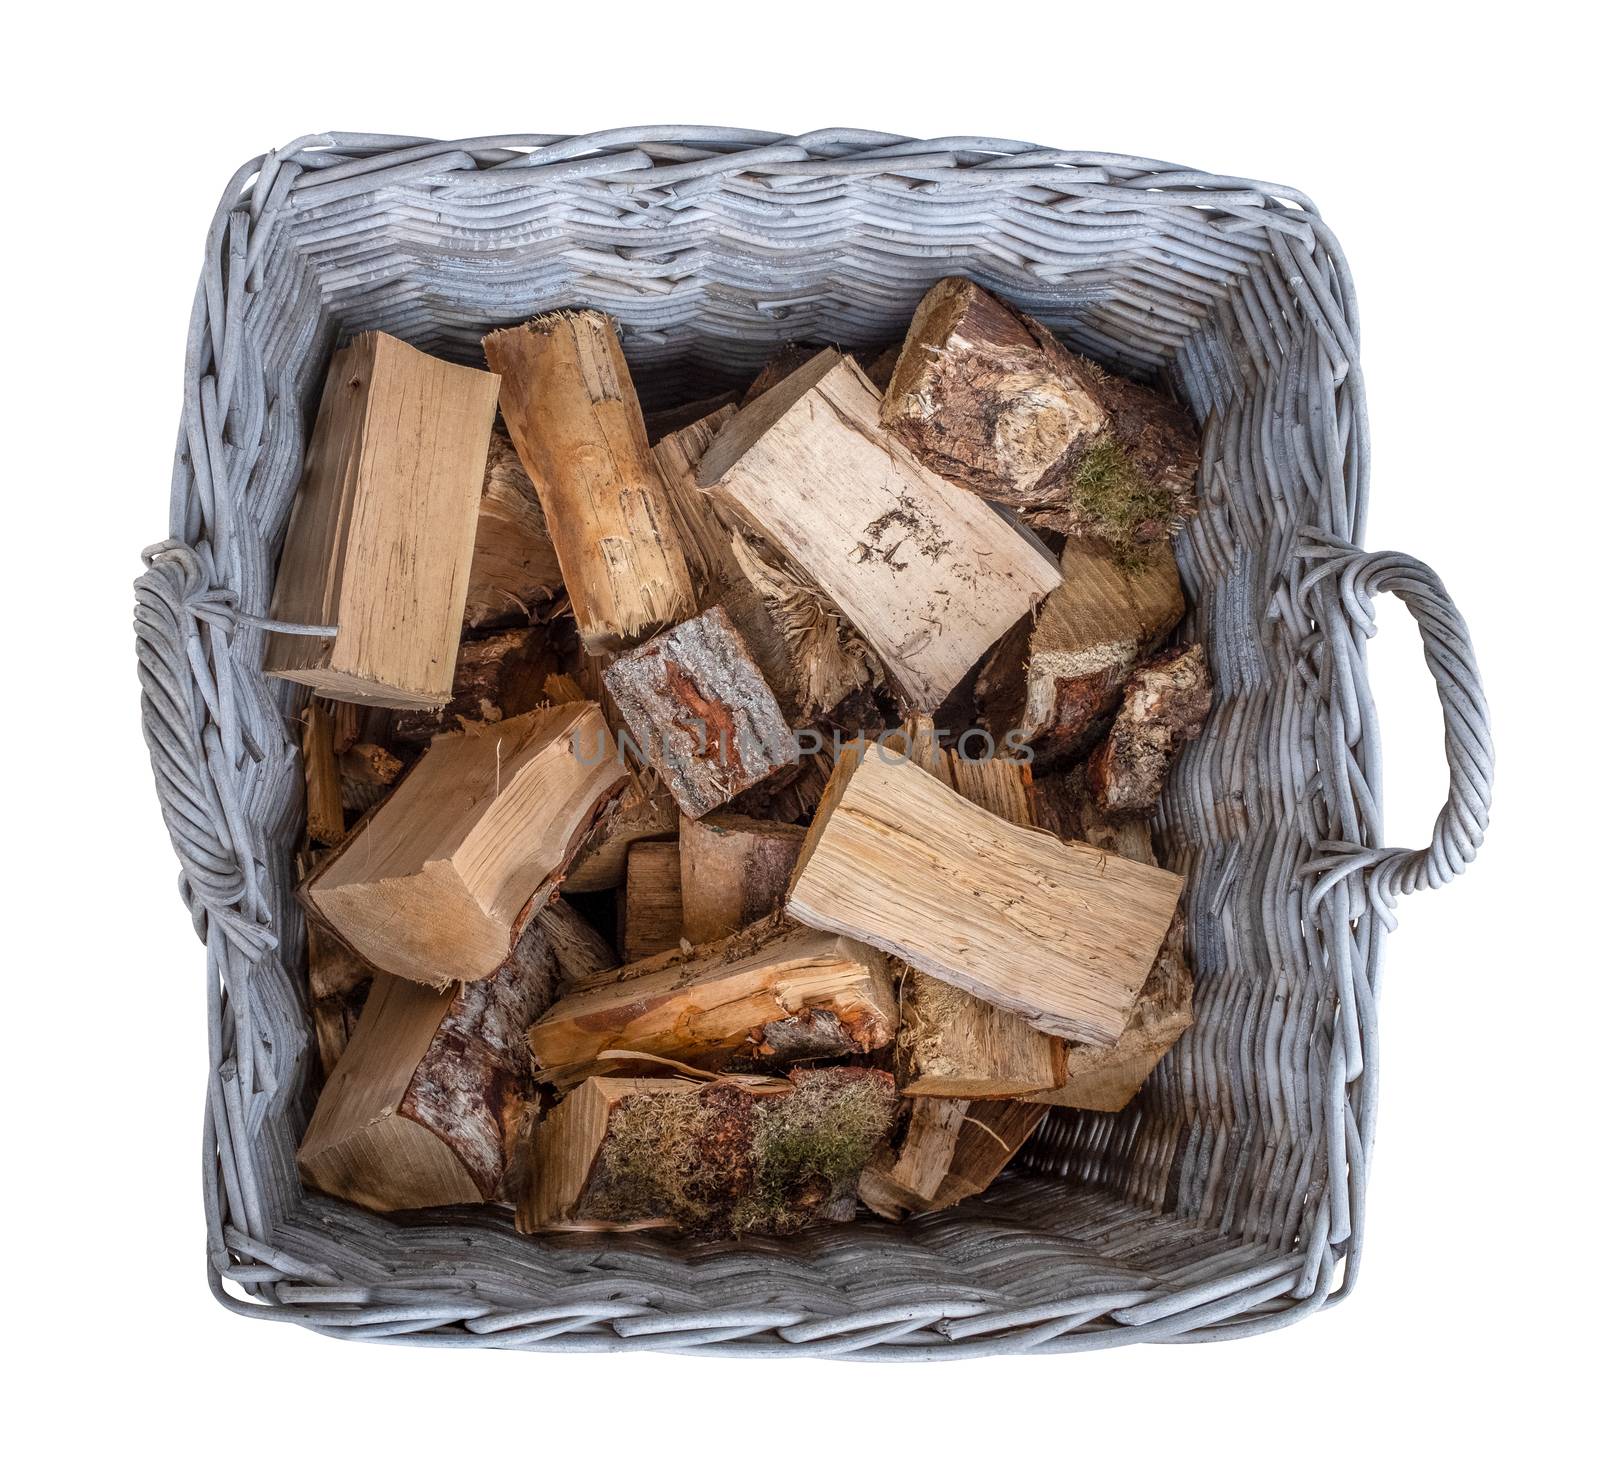 Basket Of Split Fire Wood by mrdoomits